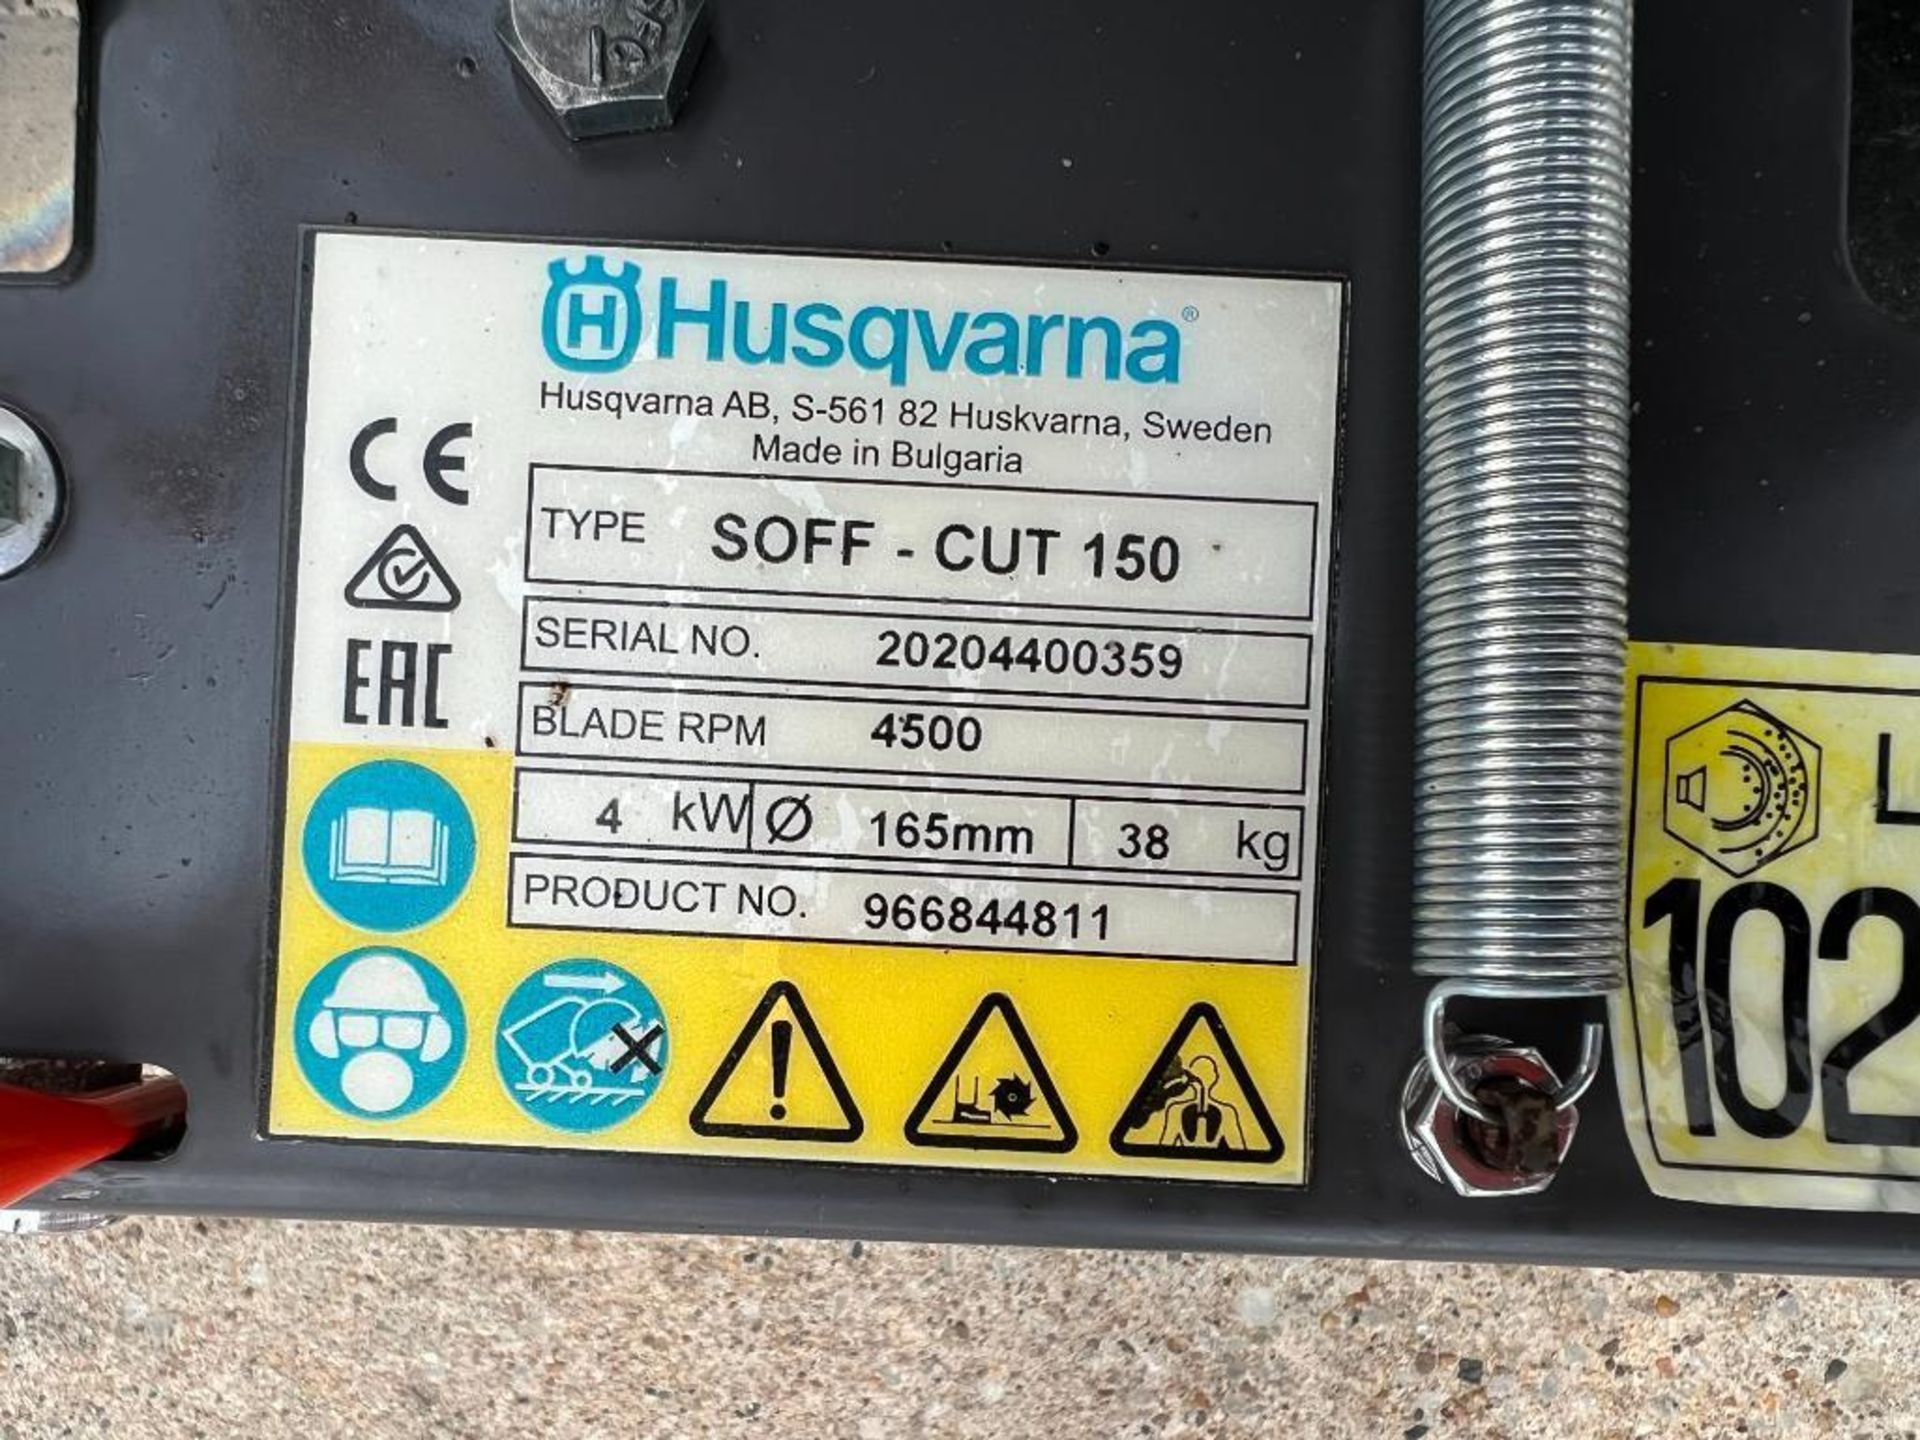 Husqvarna Soff-Cut 150 Saw, Serial #20204400359, Product #96684481, Kohler Command Pro 5.5 HP Engine - Image 8 of 8